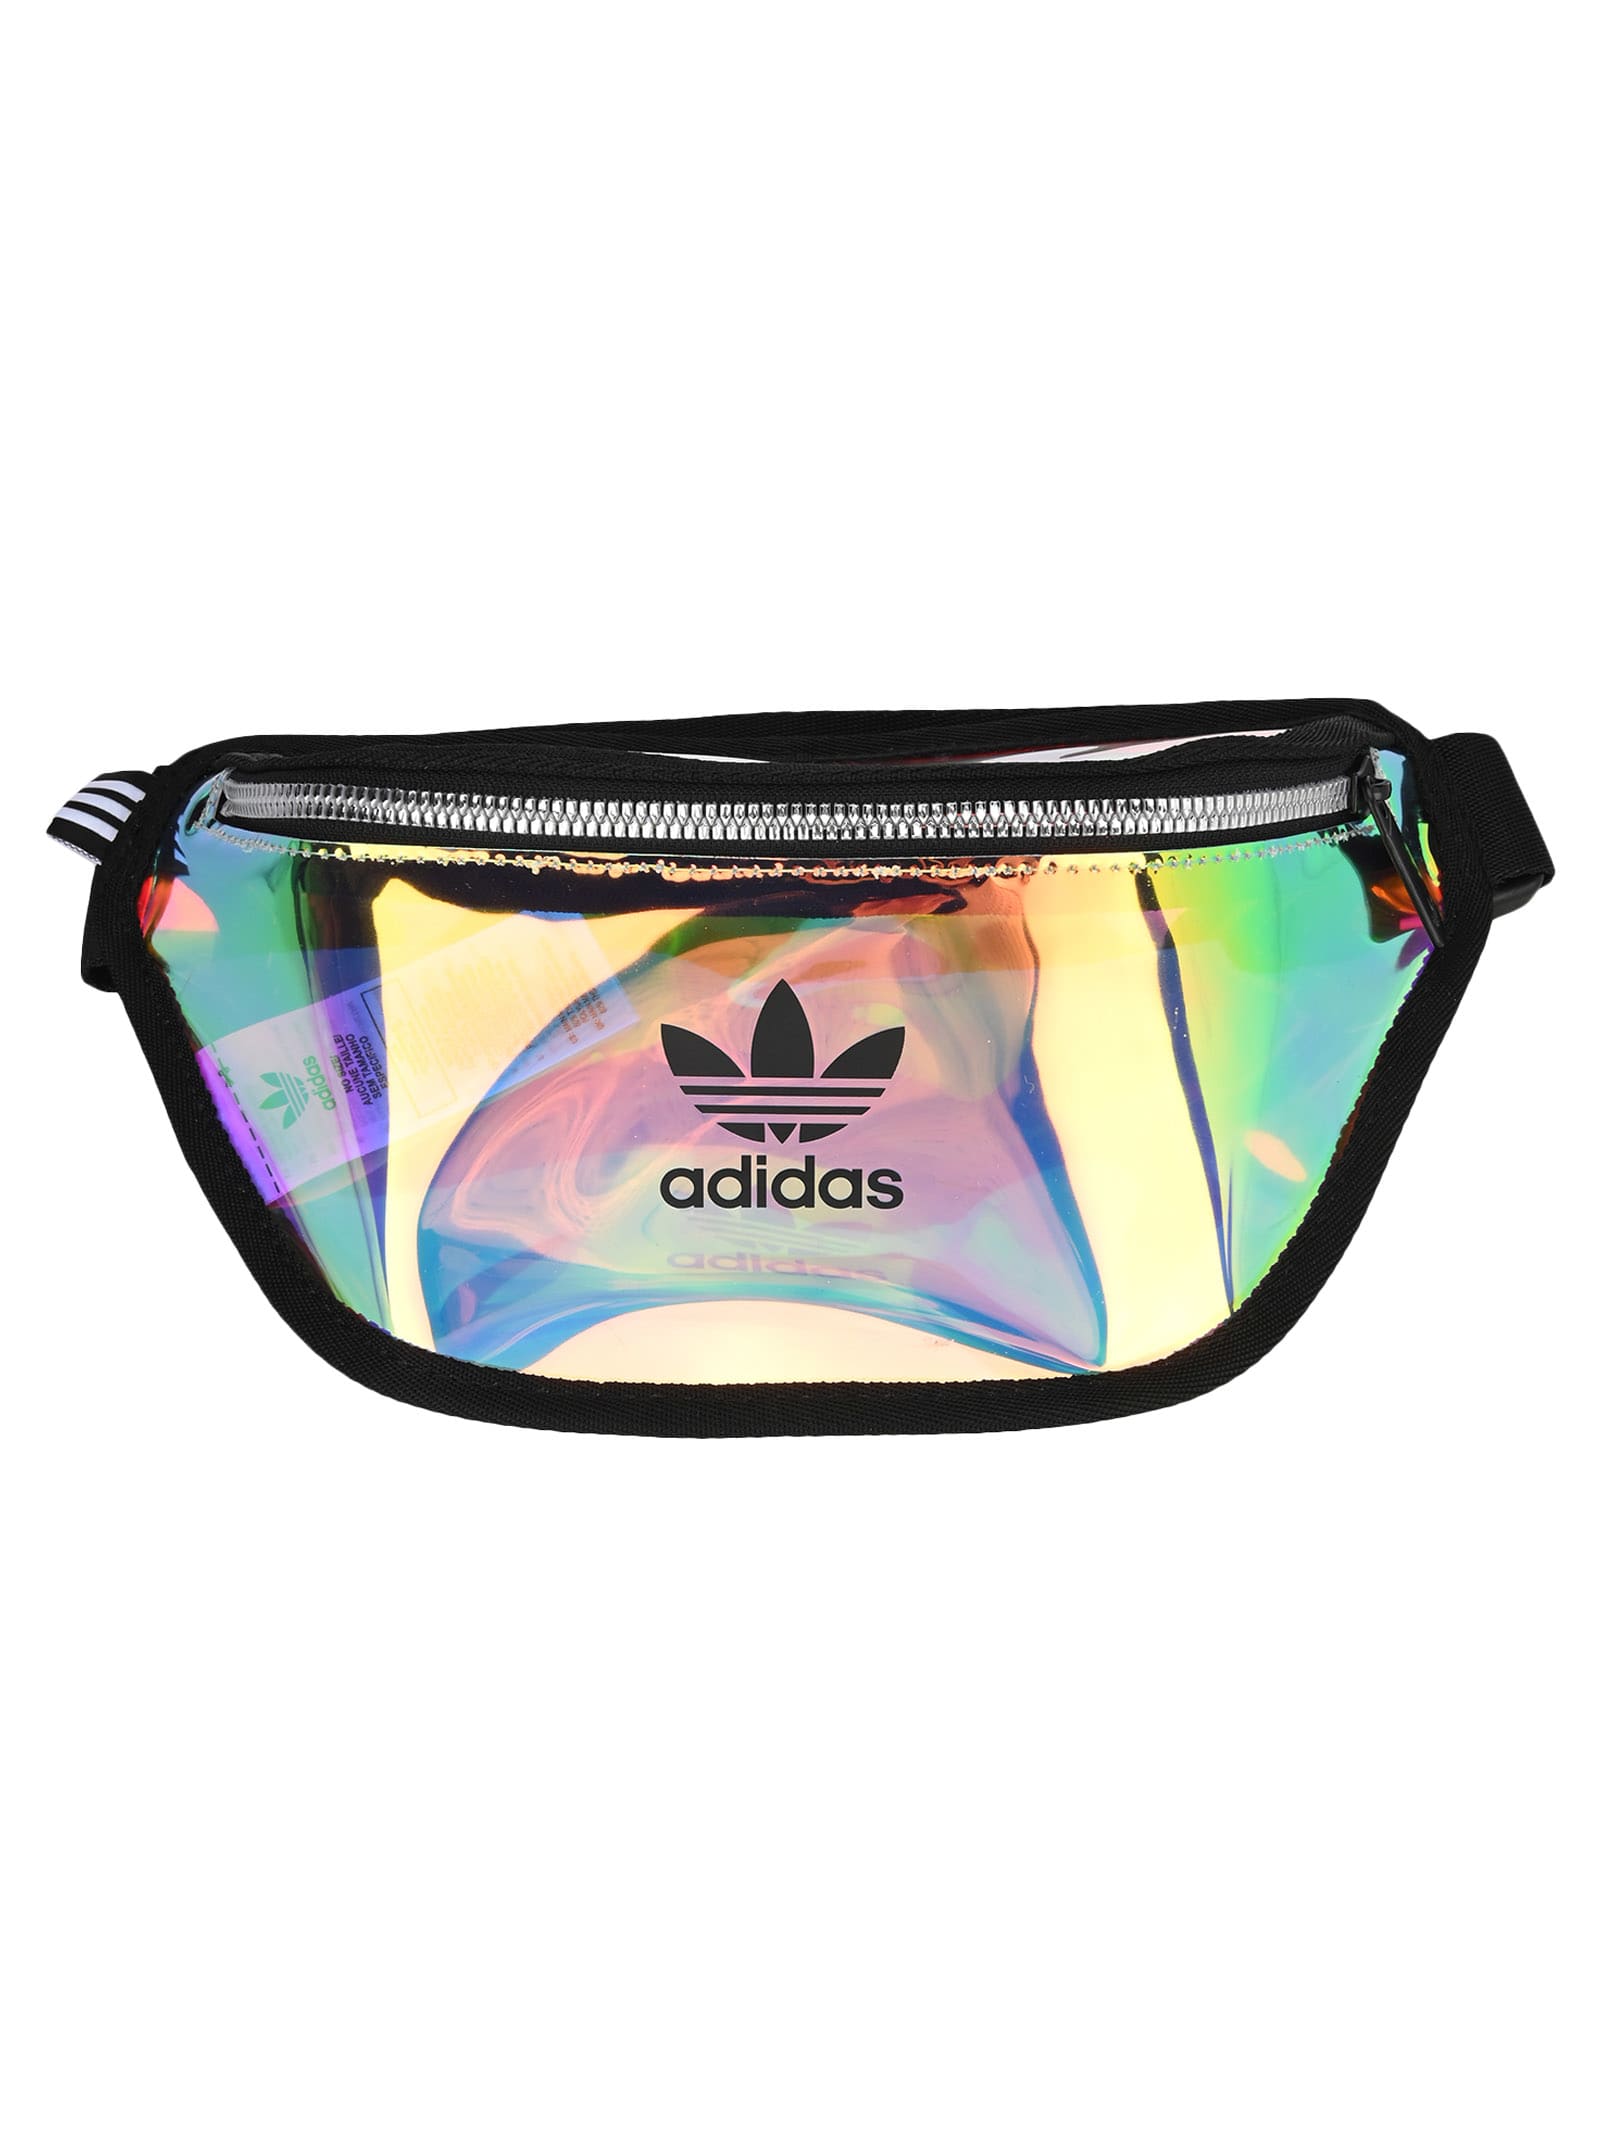 adidas originals iridescent belt bag